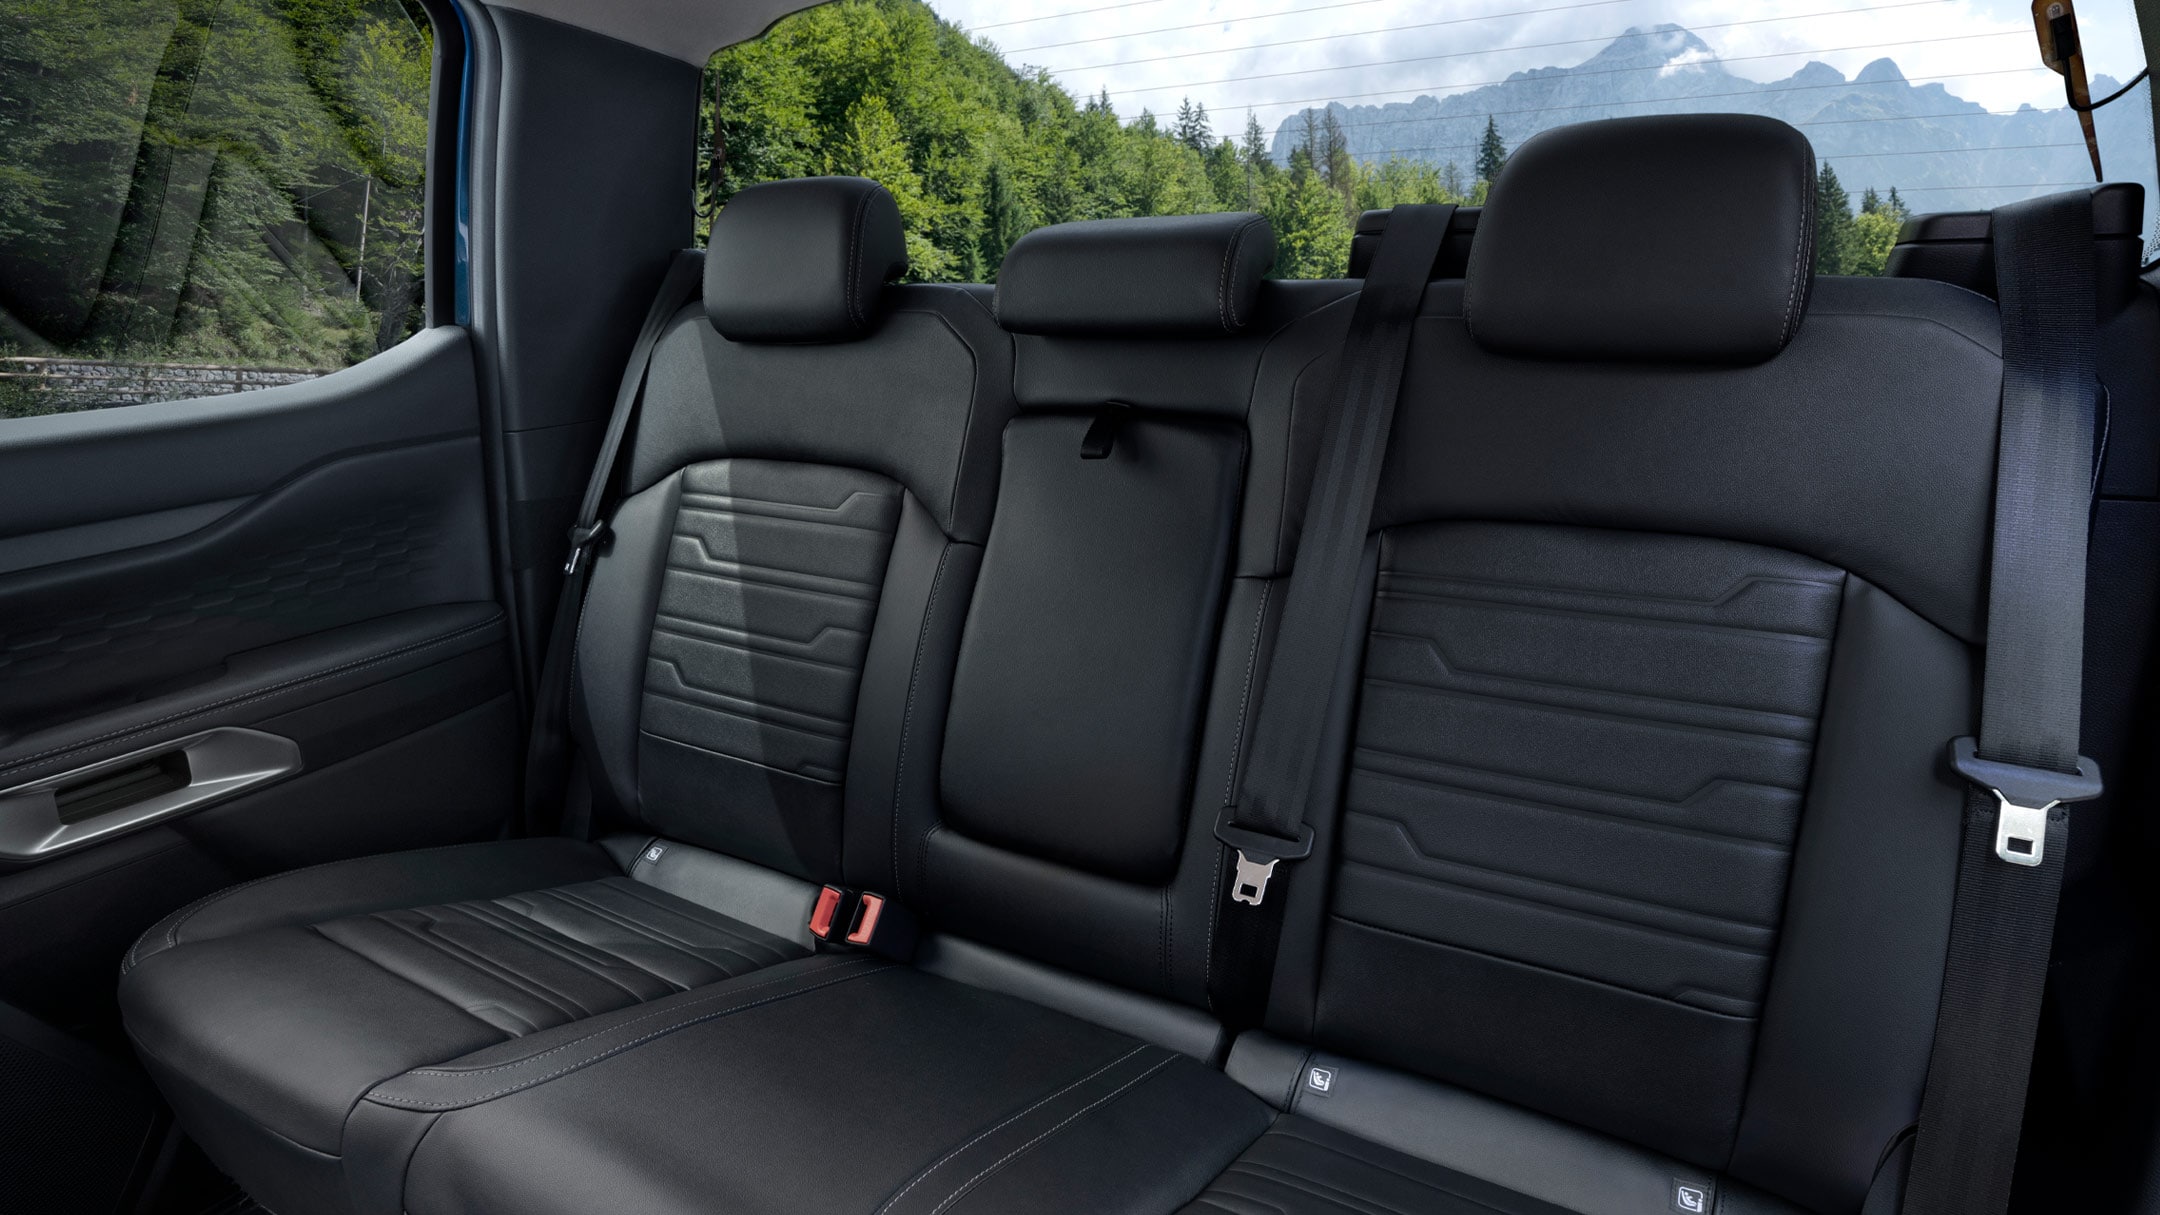 All-New Ranger Limited interior rear seats